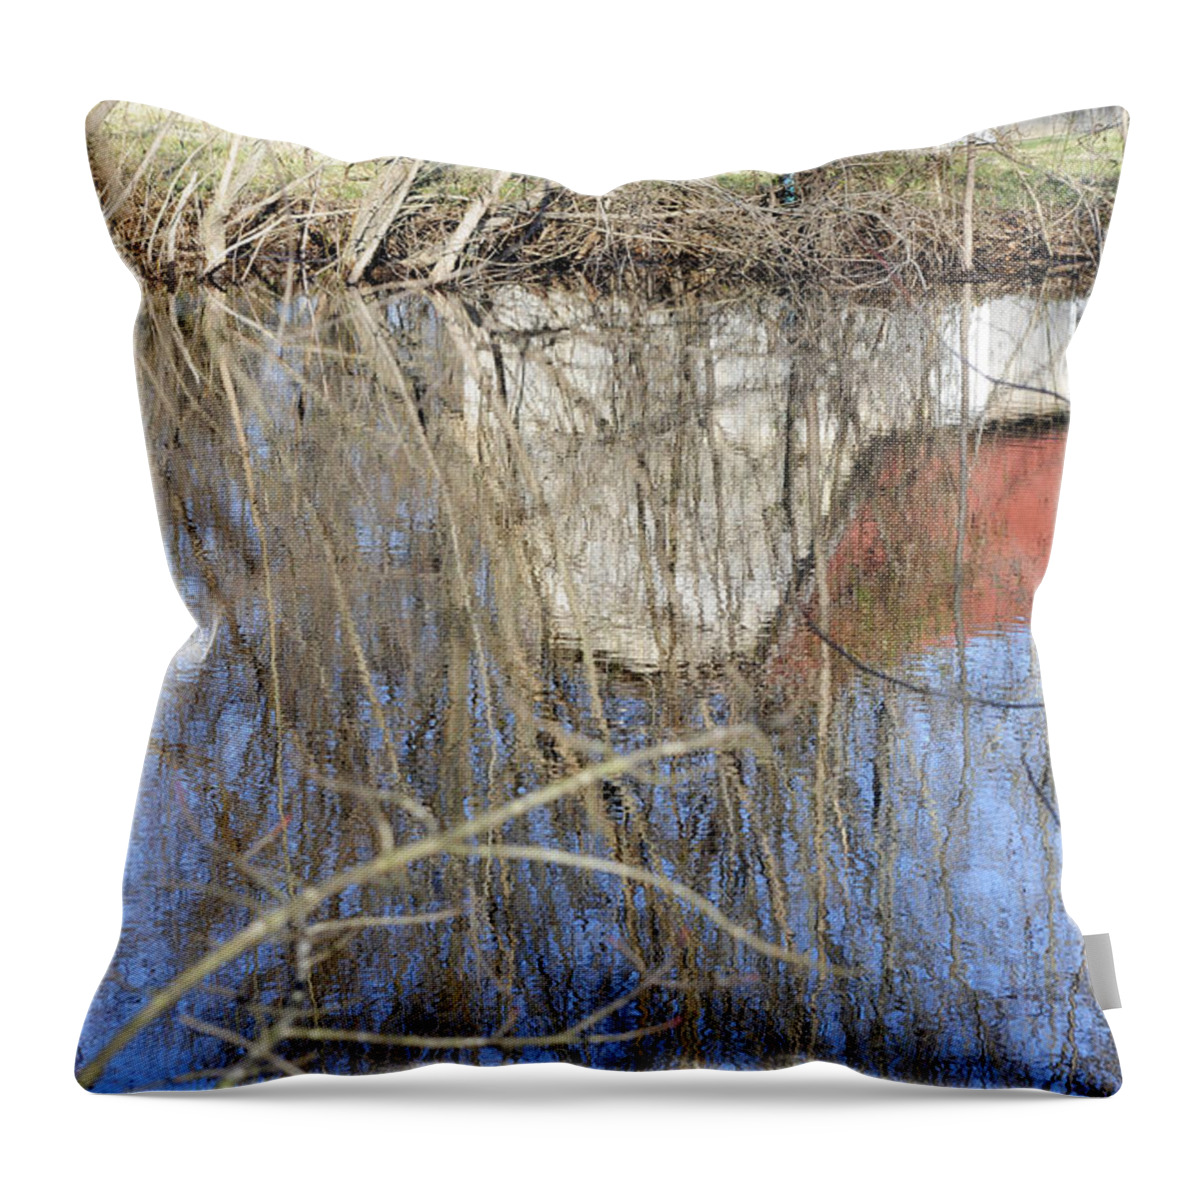 Barn Throw Pillow featuring the photograph Beneath the Farm Pond by Wanda Brandon